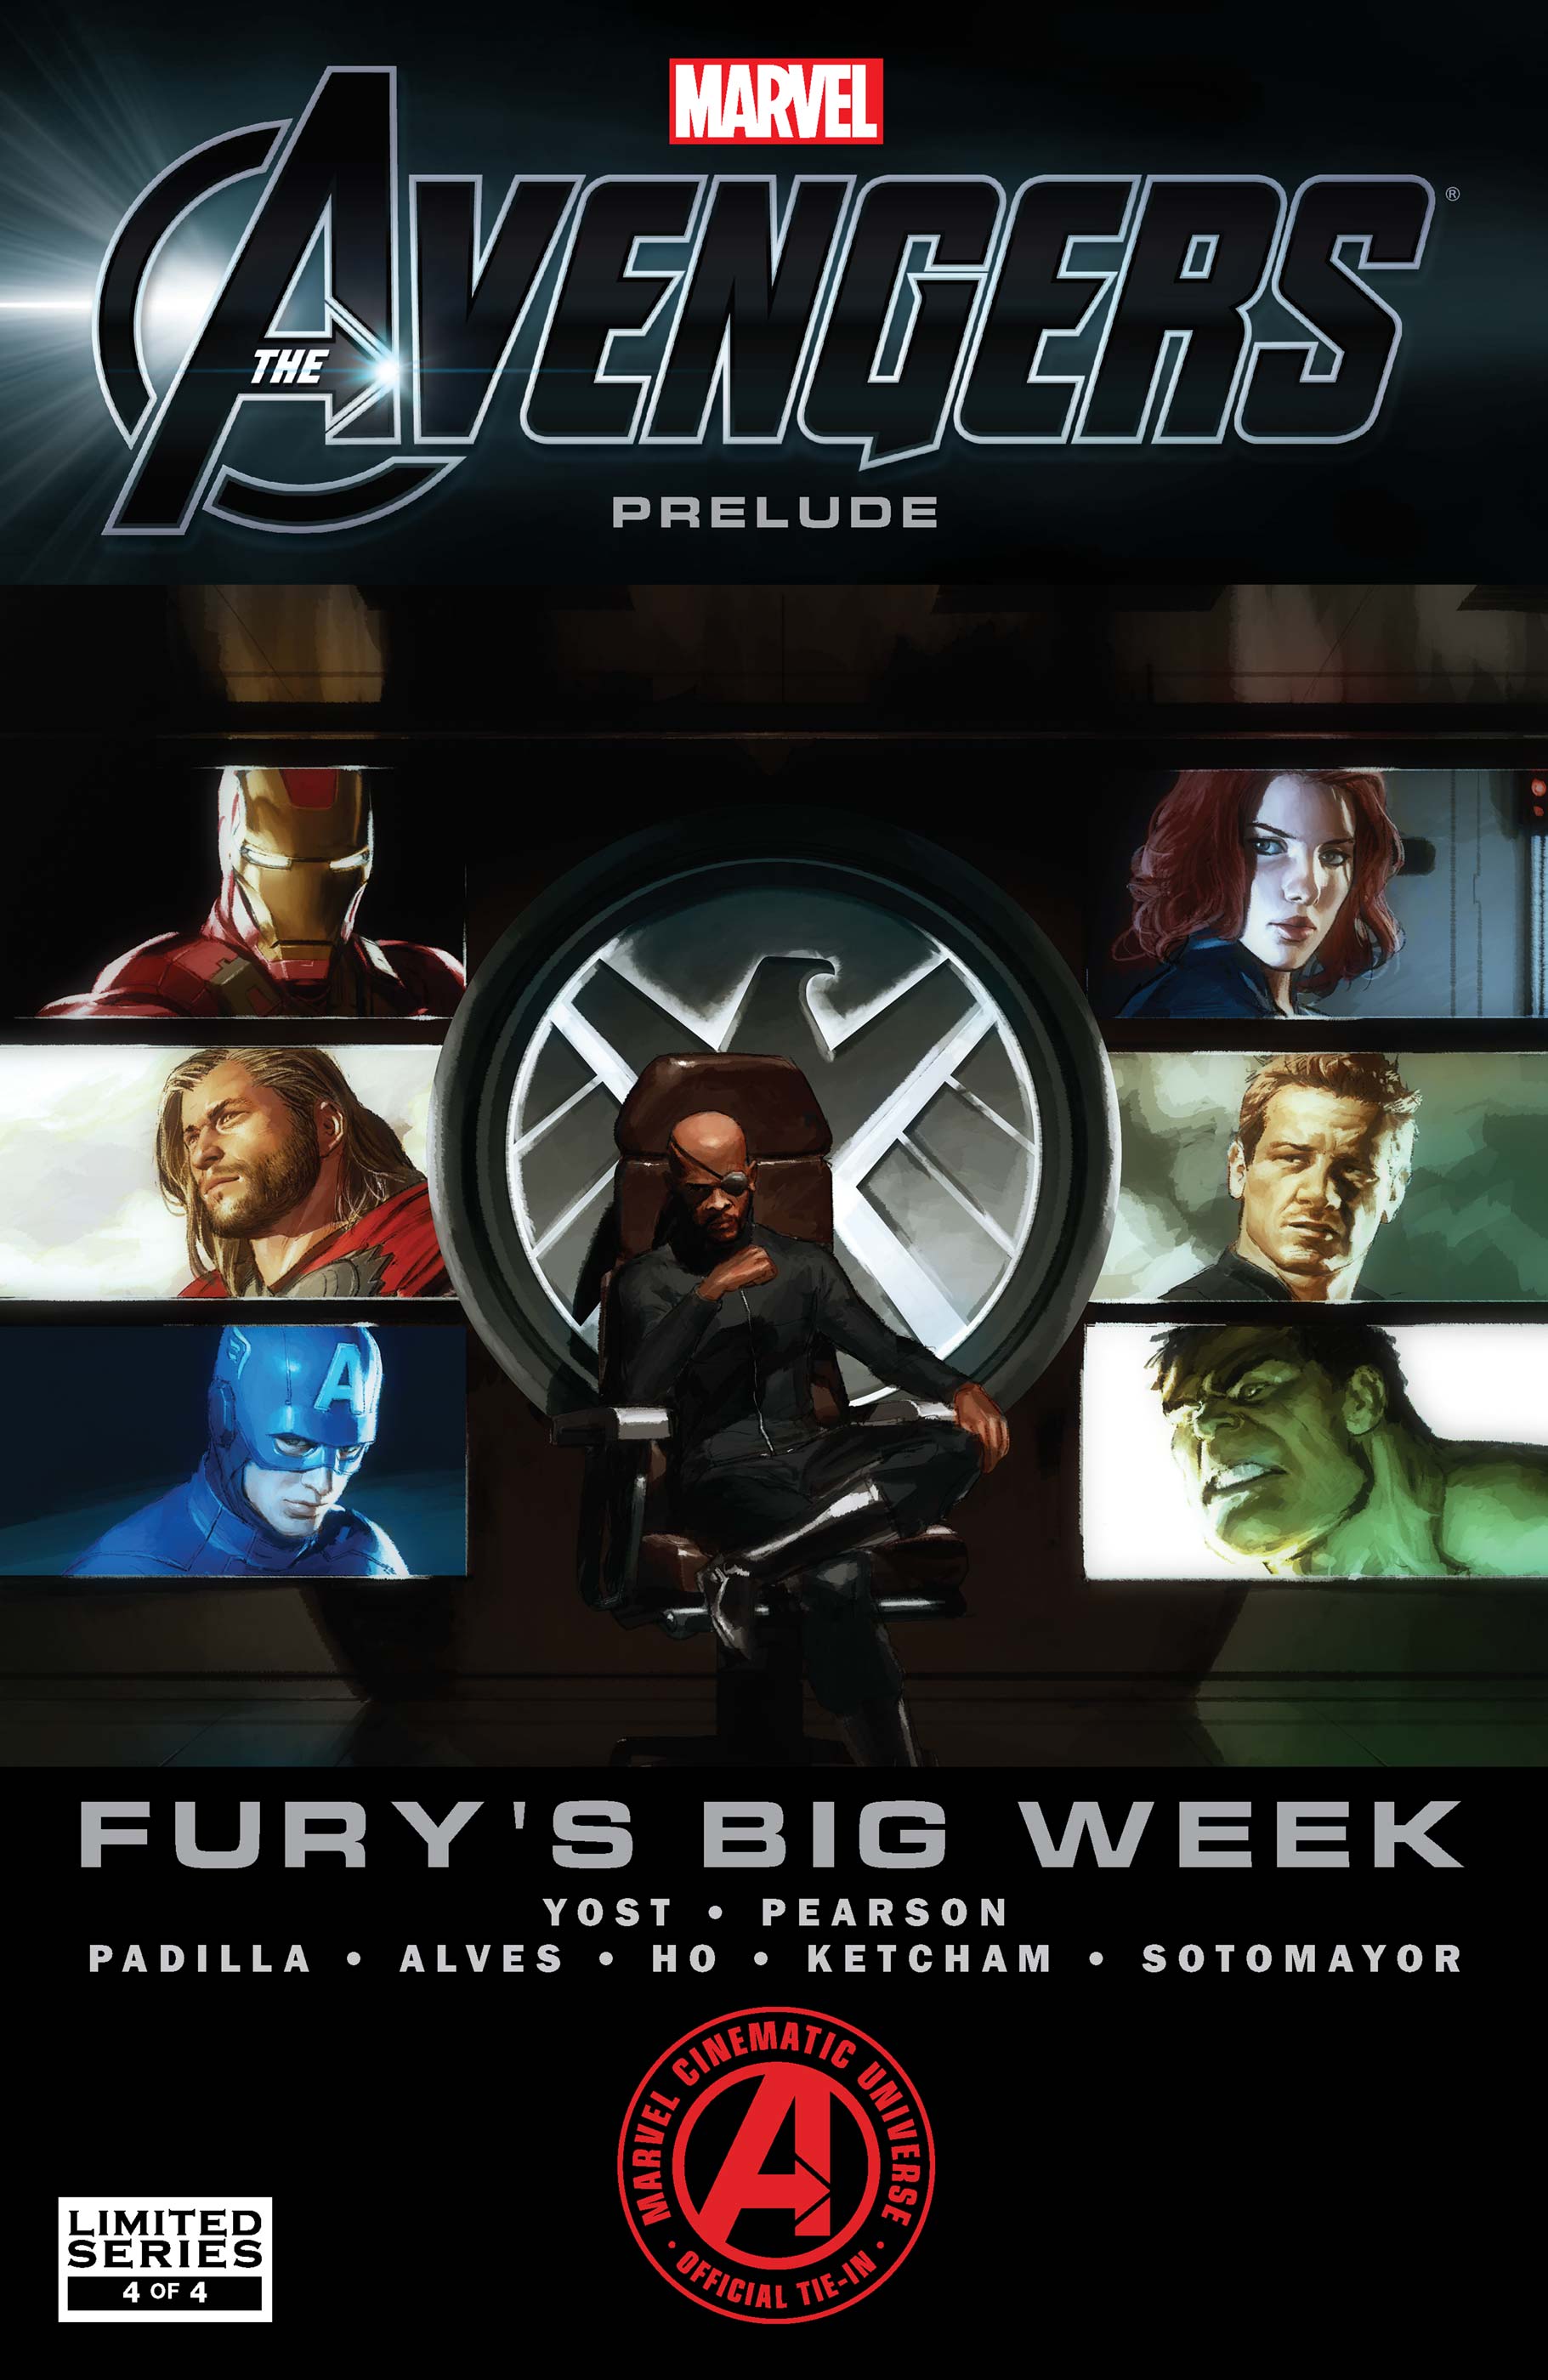 Fury's big week